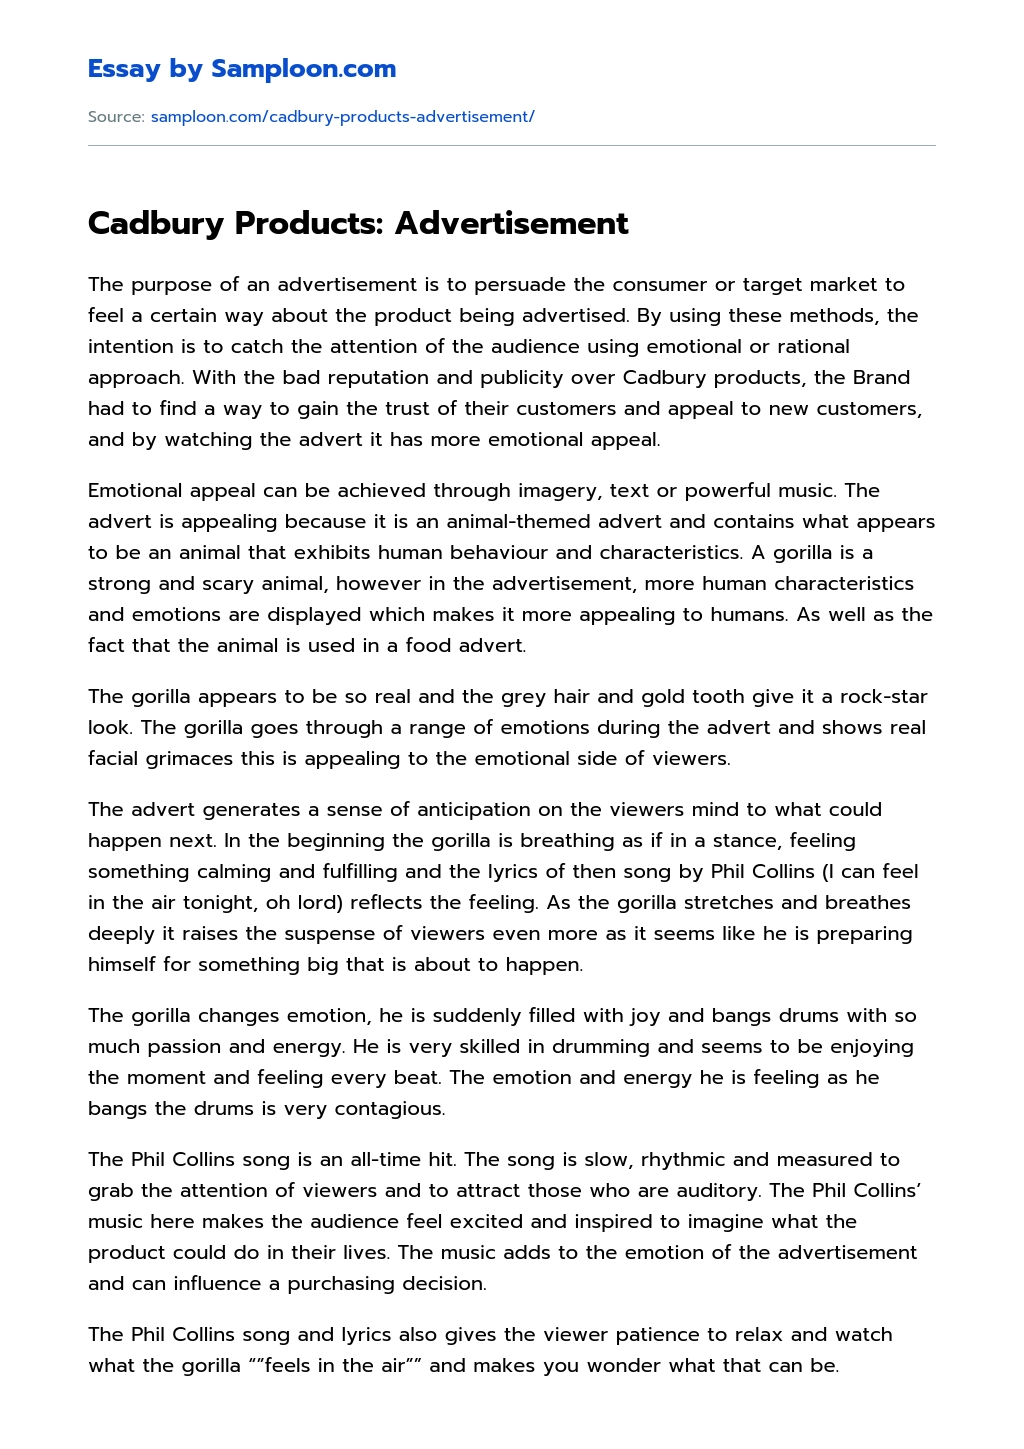 Cadbury Products: Advertisement Analytical Essay essay